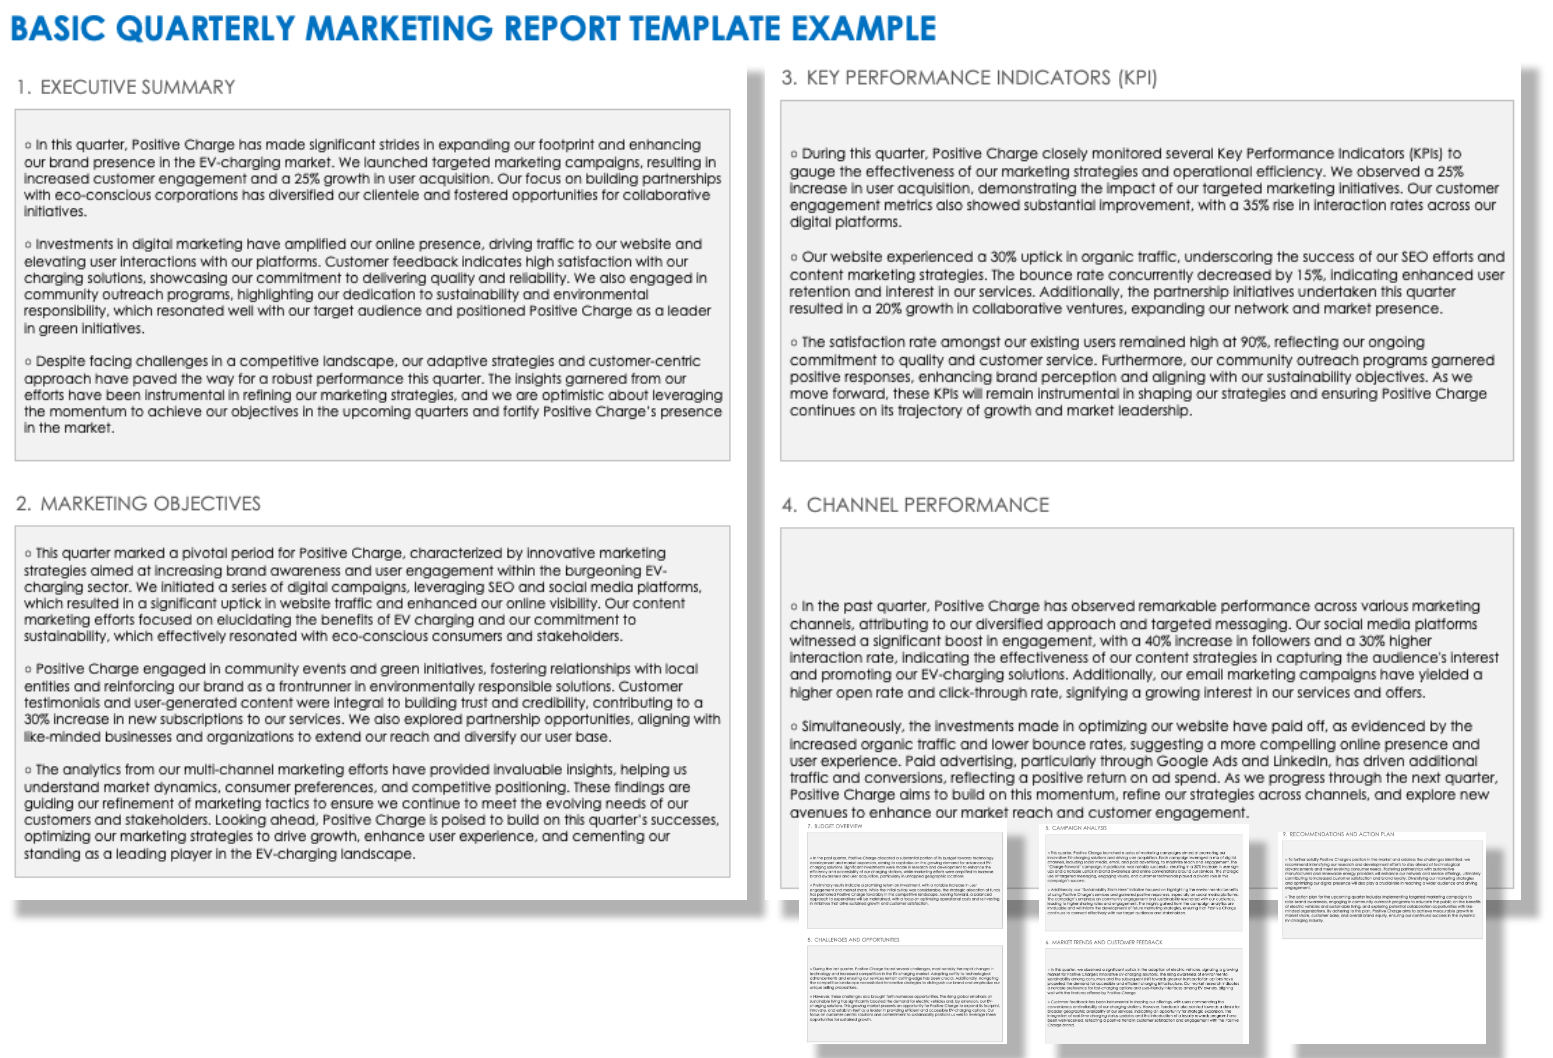 Basic Quarterly Marketing Report Example Template